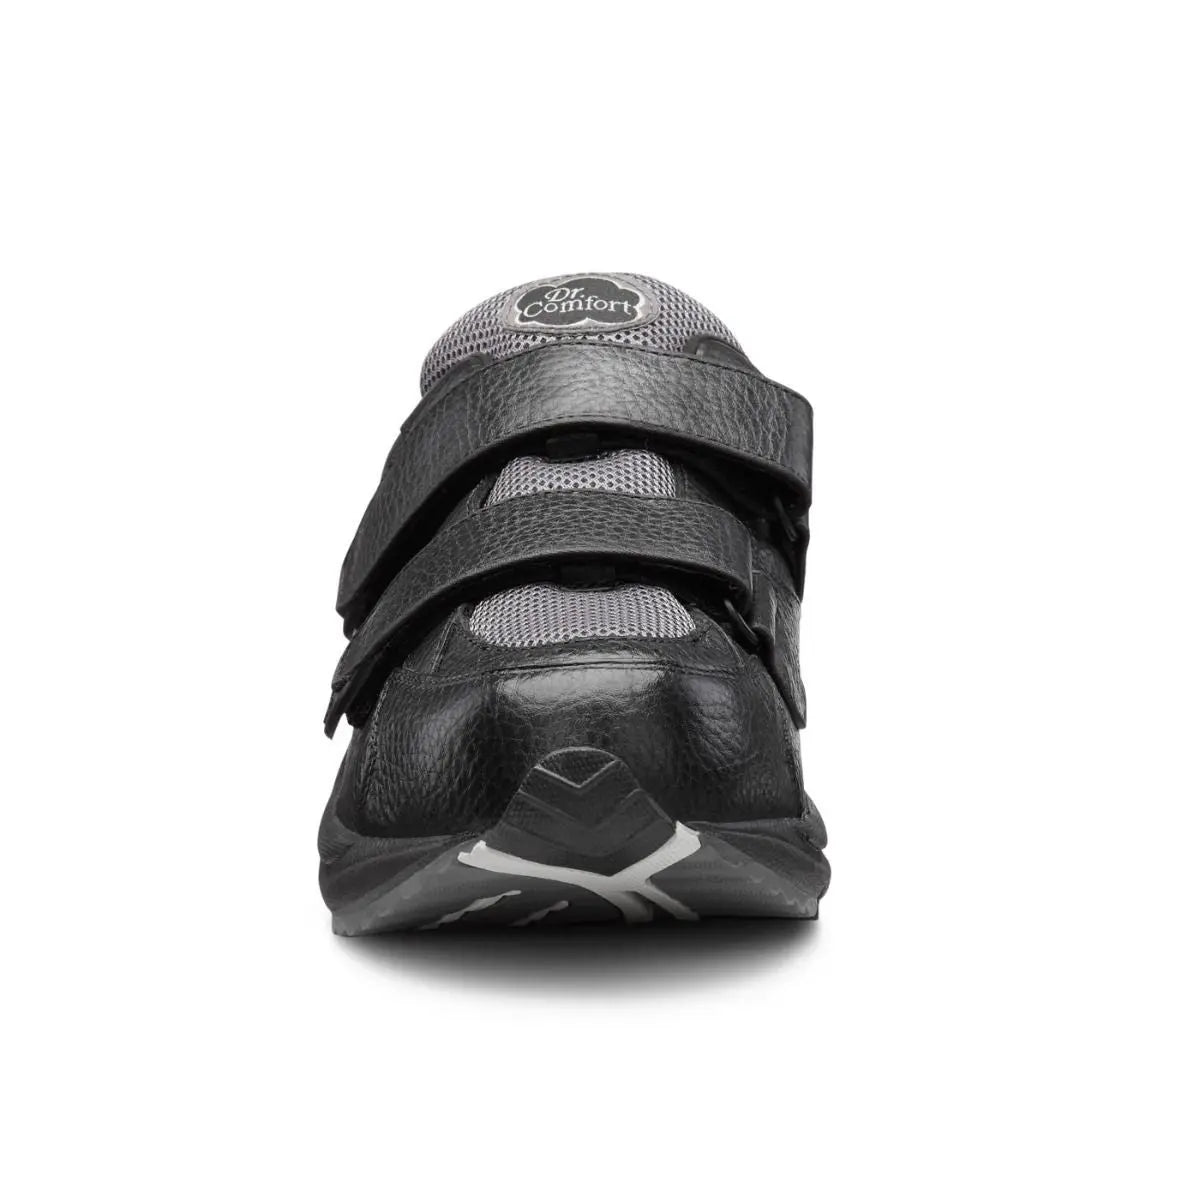 Dr. Comfort Men's Winner-X Therapeutic Double Depth Diabetic Walking Shoe, Black Front Image